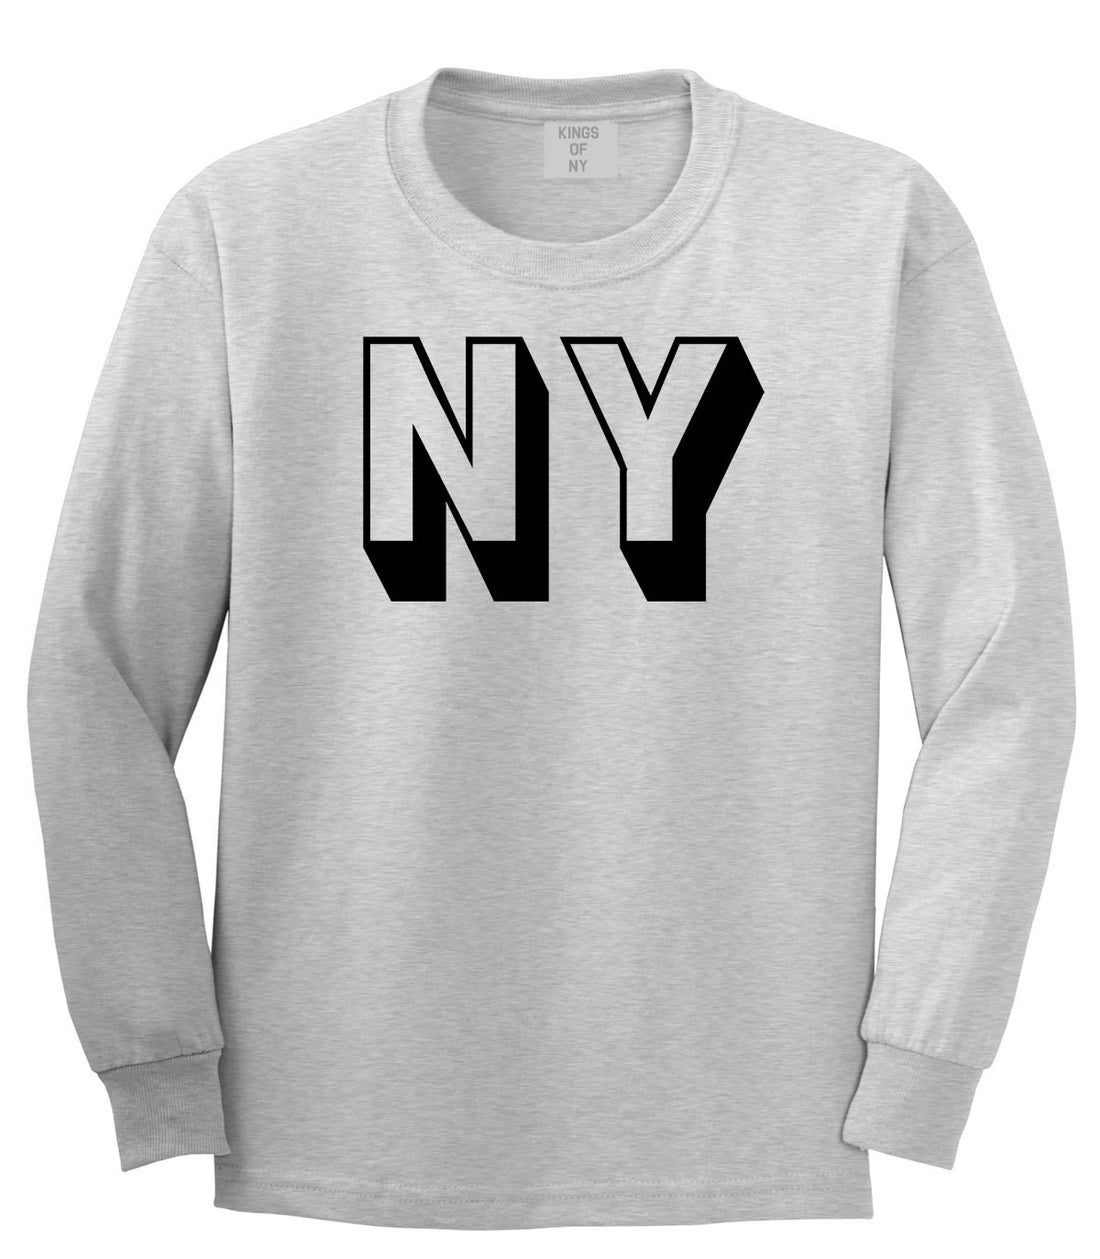 NY Block Letter New York Long Sleeve T-Shirt in Grey By Kings Of NY